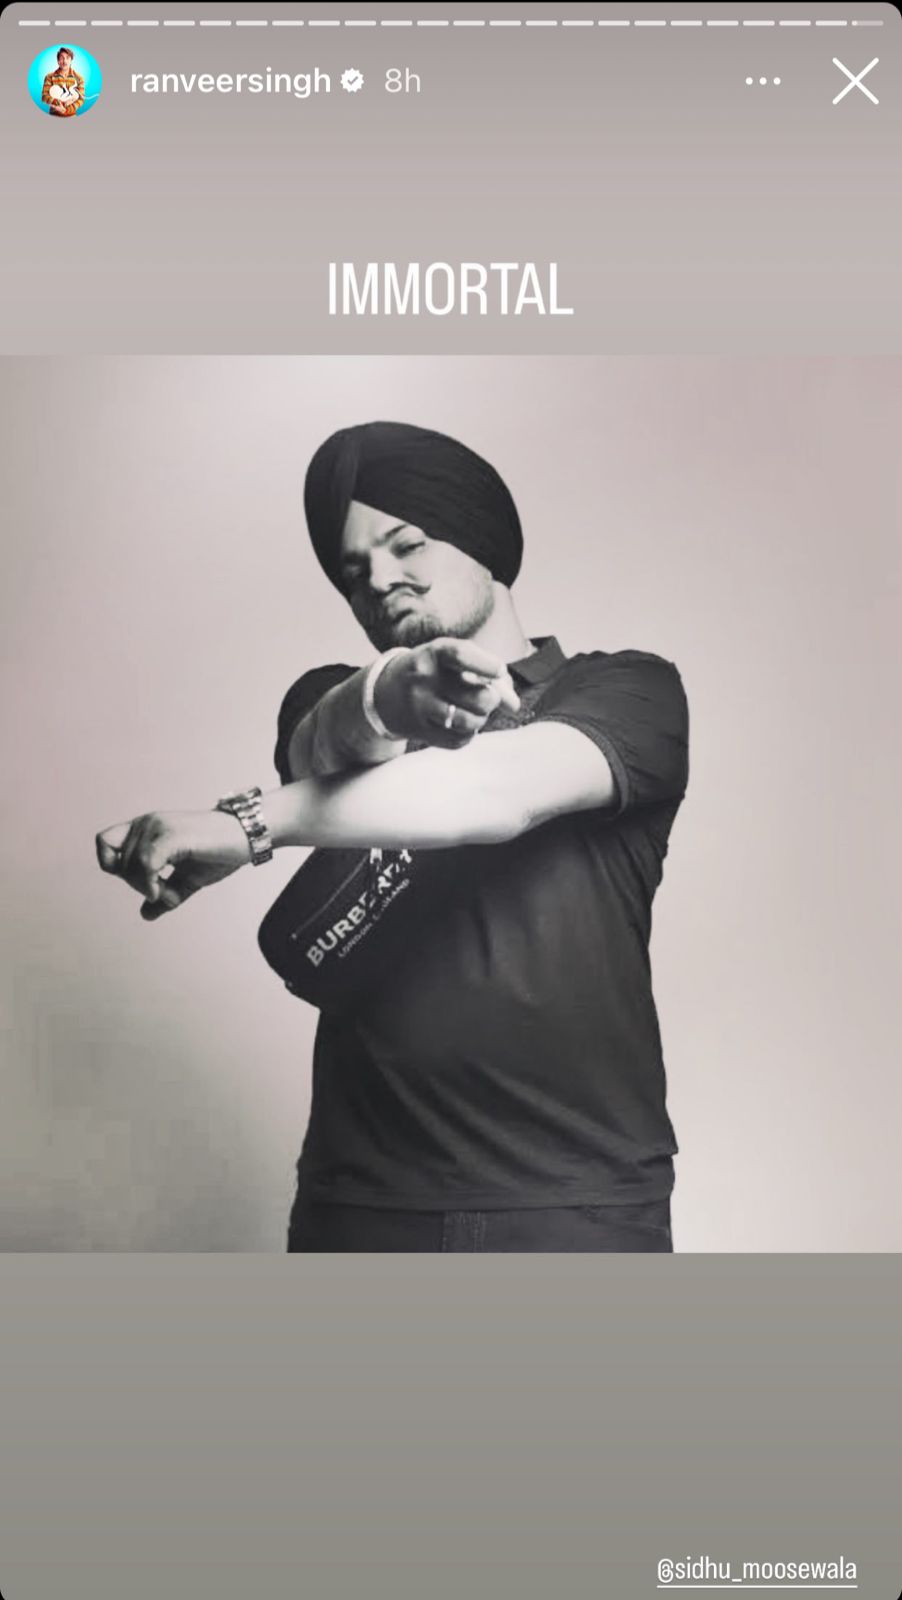 Punjabi Superstar Known as the Indian Drake, Diljit Dosanjh Announces  World Tour - CelebrityAccess